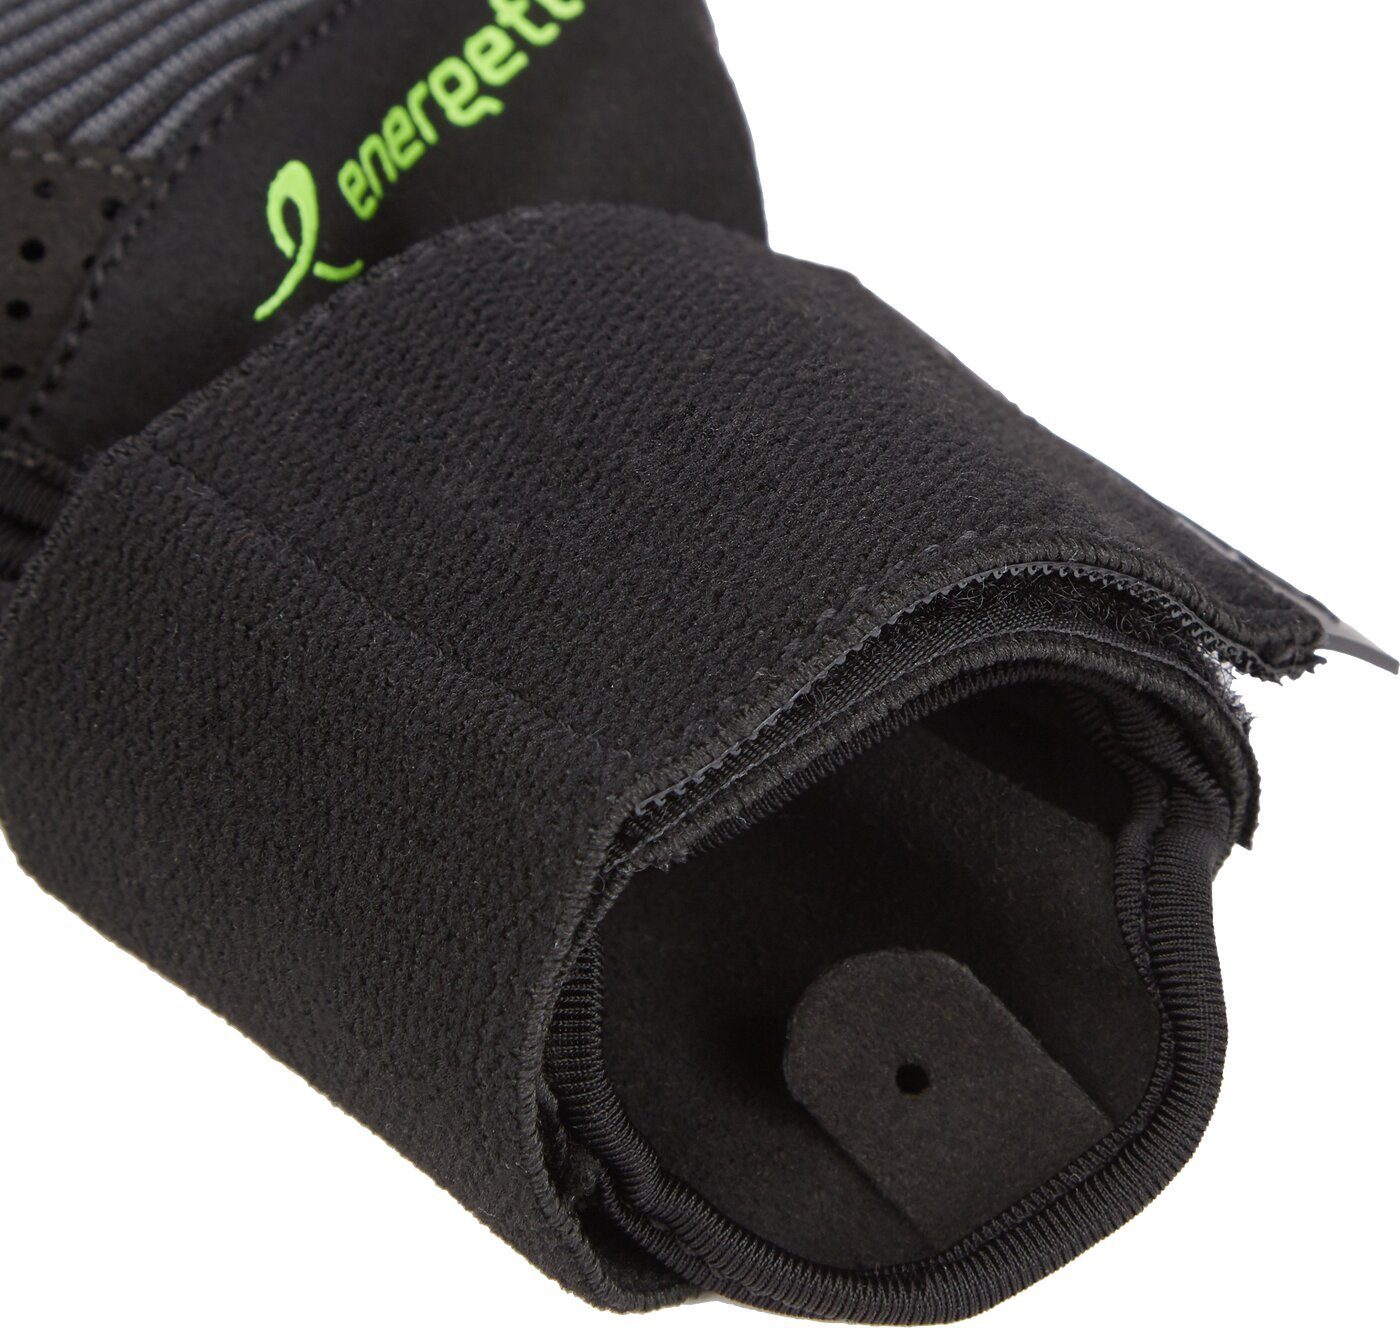 MFG550 Energetics Handschuh Gewichtshandschuhe BLACK/YELLOW